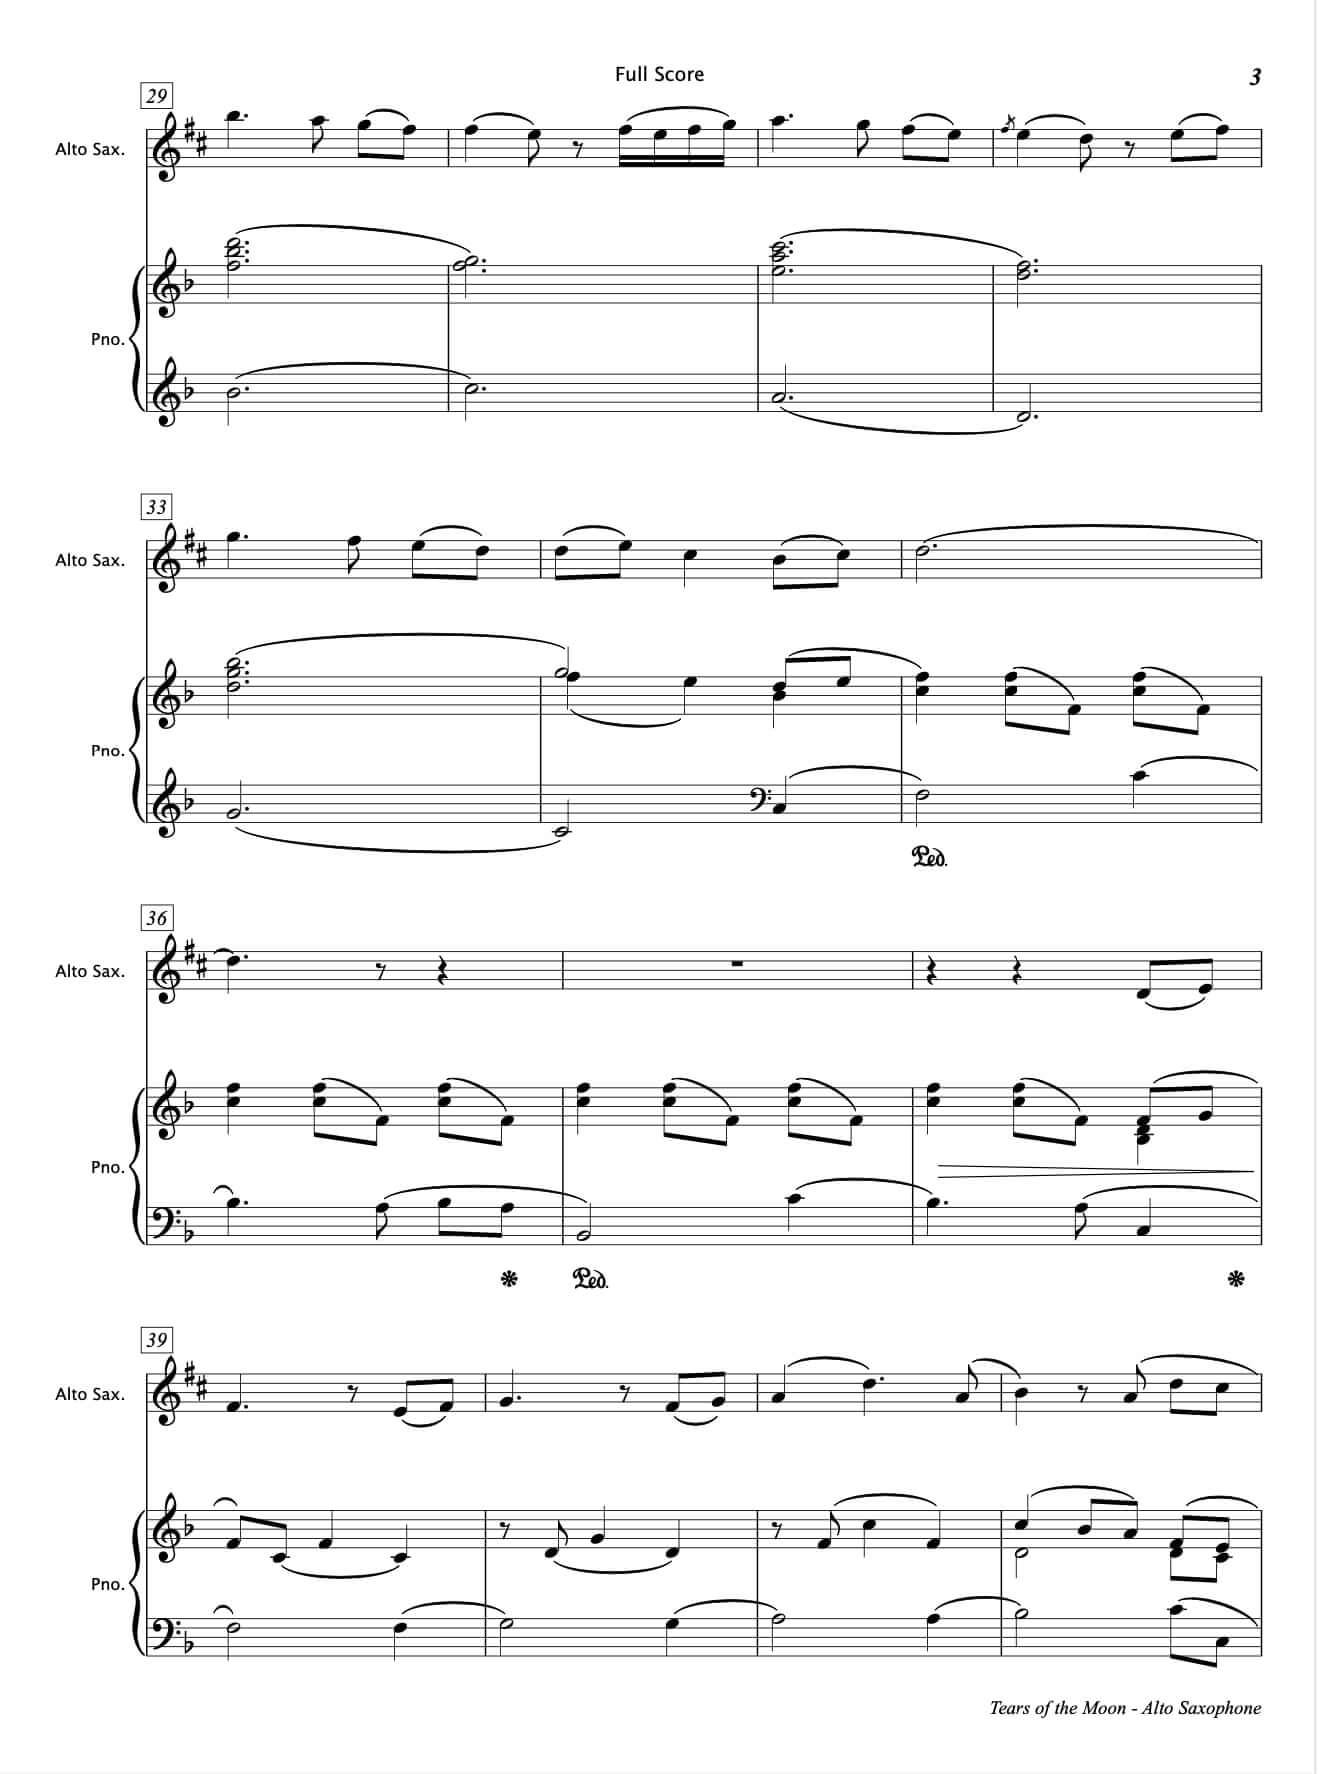 Tears of the Moon [Alto Saxophone & Piano] - Paul Barker Music 